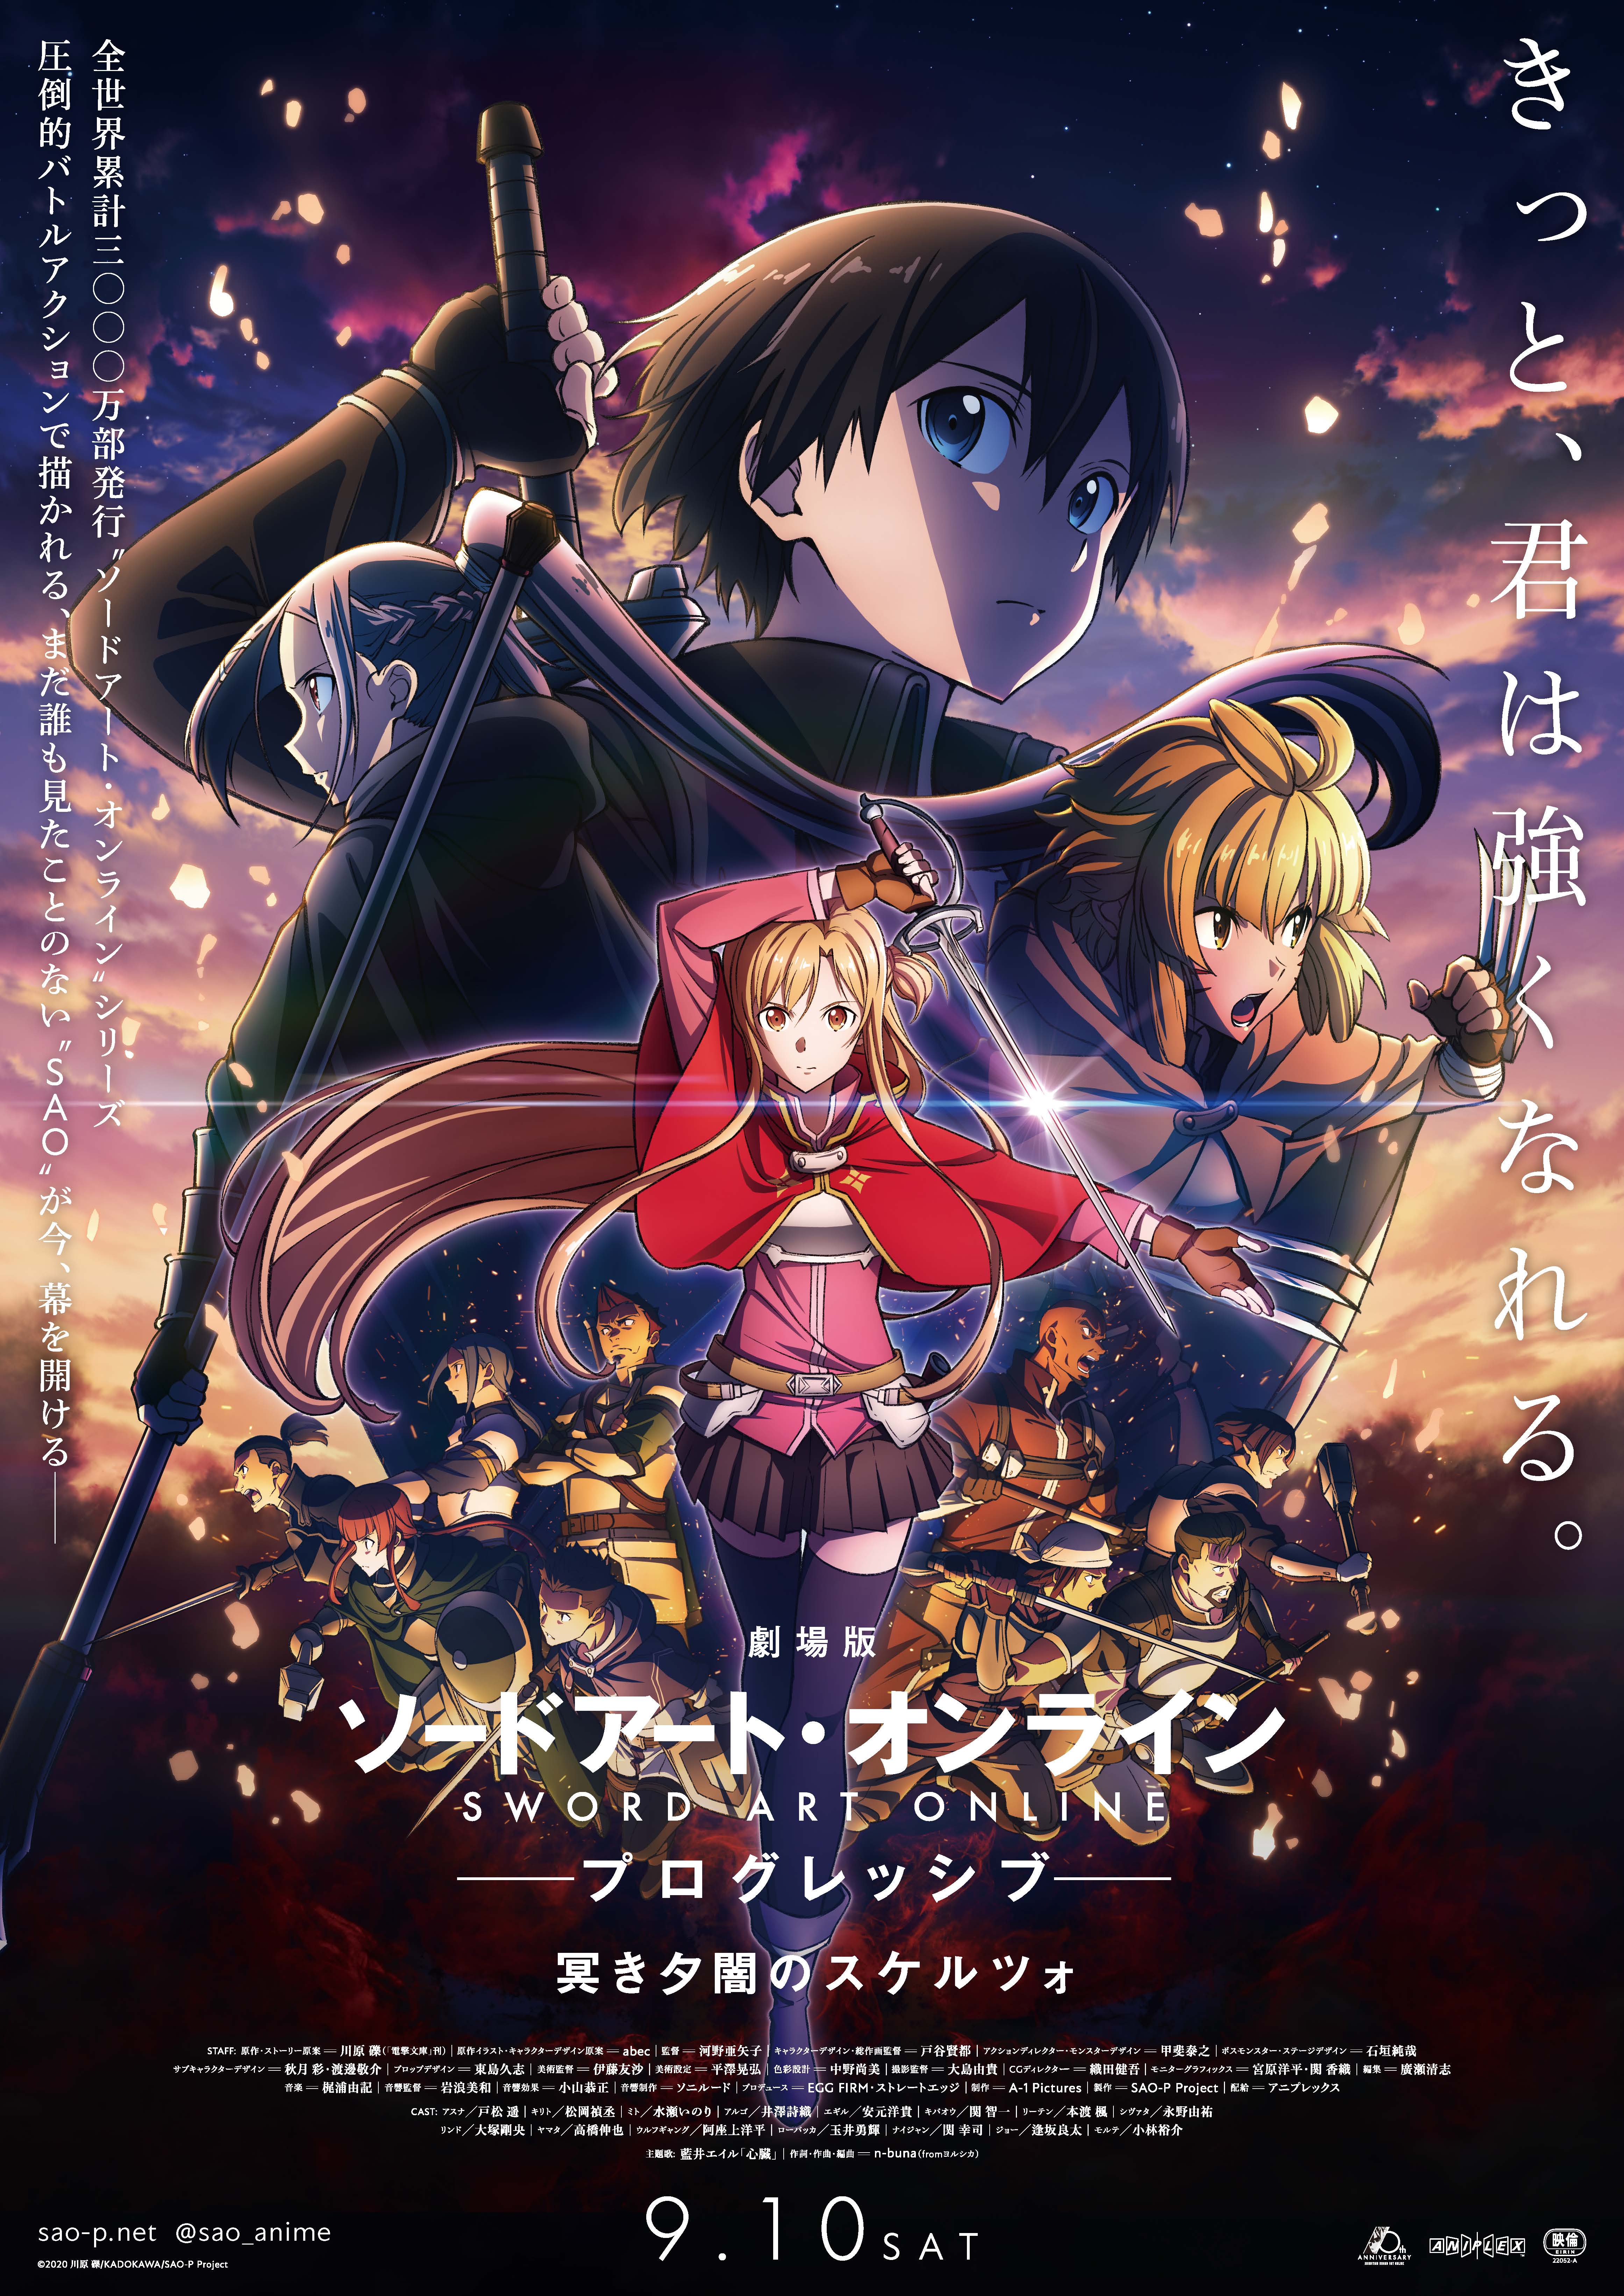 Sword Art Online -Progressive- Scherzo of Deep Night anime film main visual